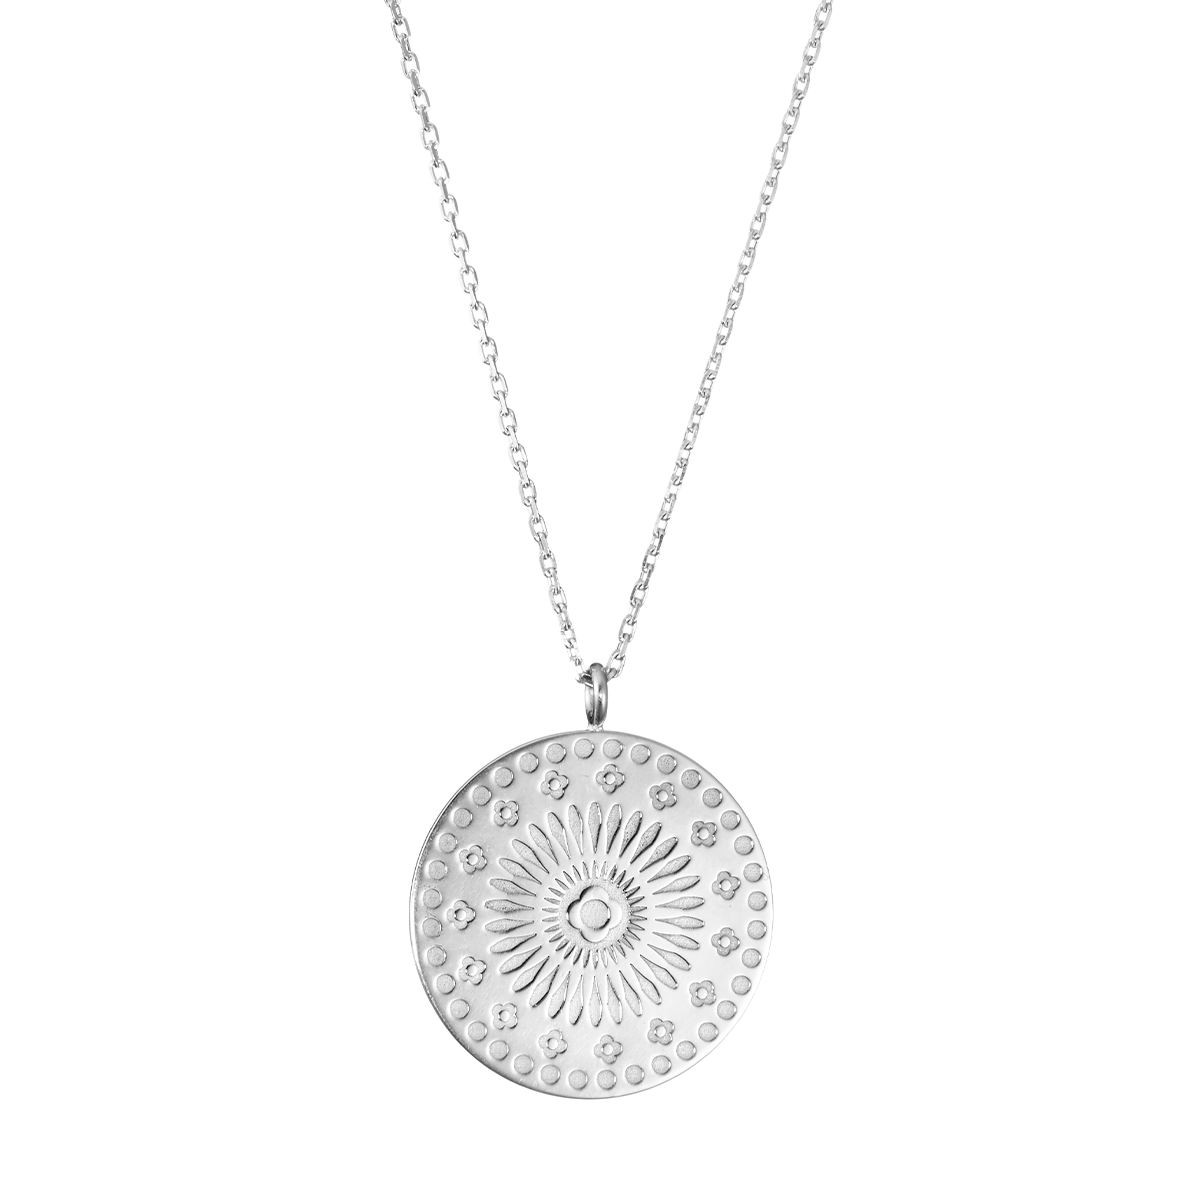 Onnenamuletti pendant, large, silver